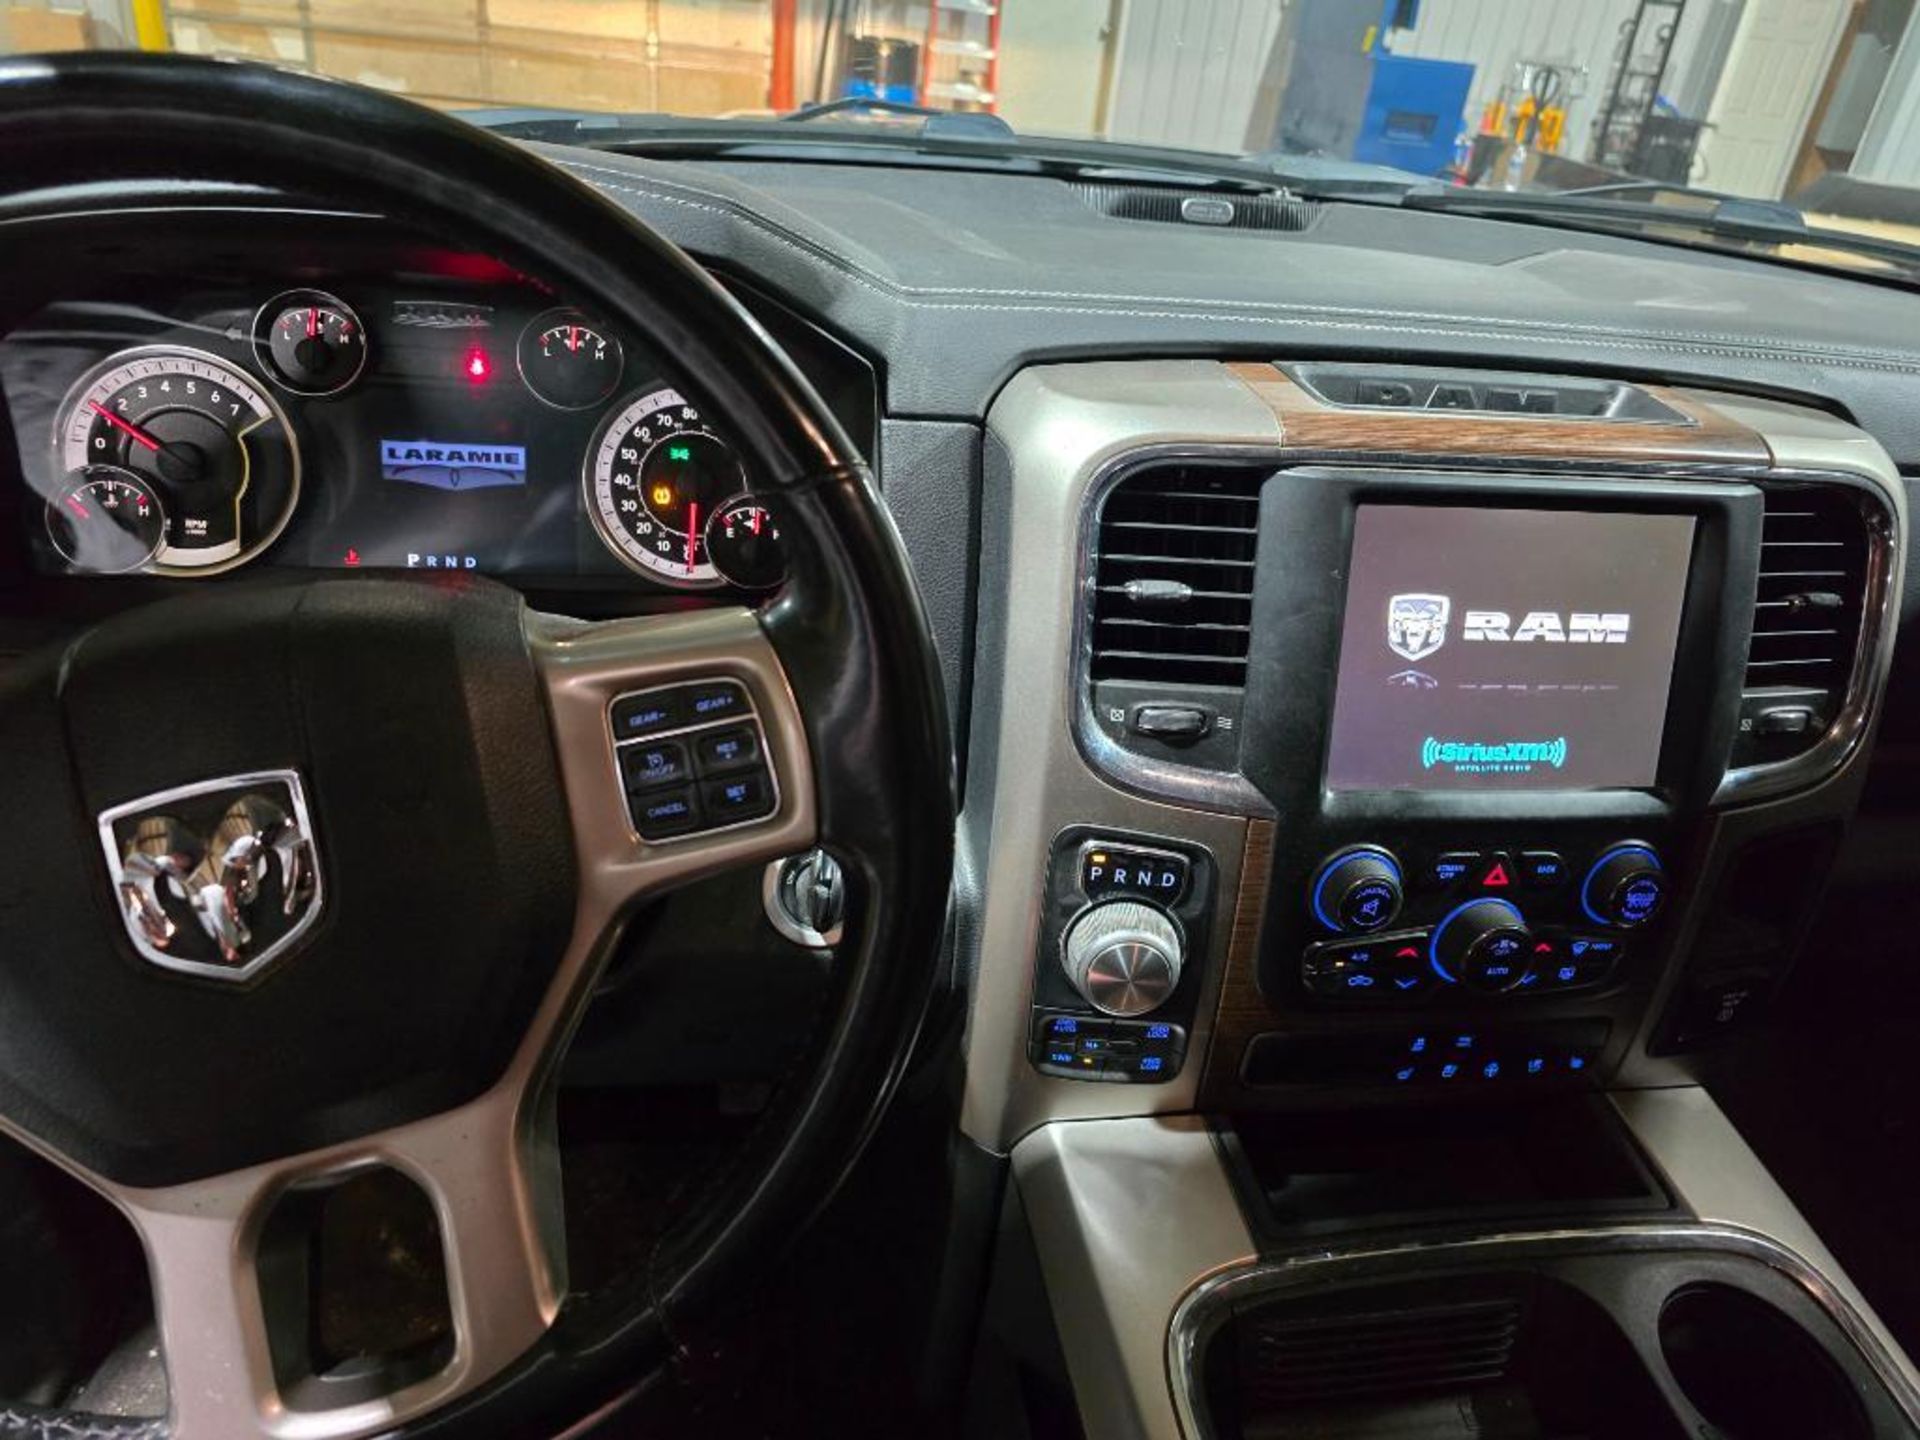 2016 Dodge Ram 1500 Truck, Crew Cab, Leather Interior, Power Seats/Windows, 6,800 GVWR, Running Boar - Image 13 of 18